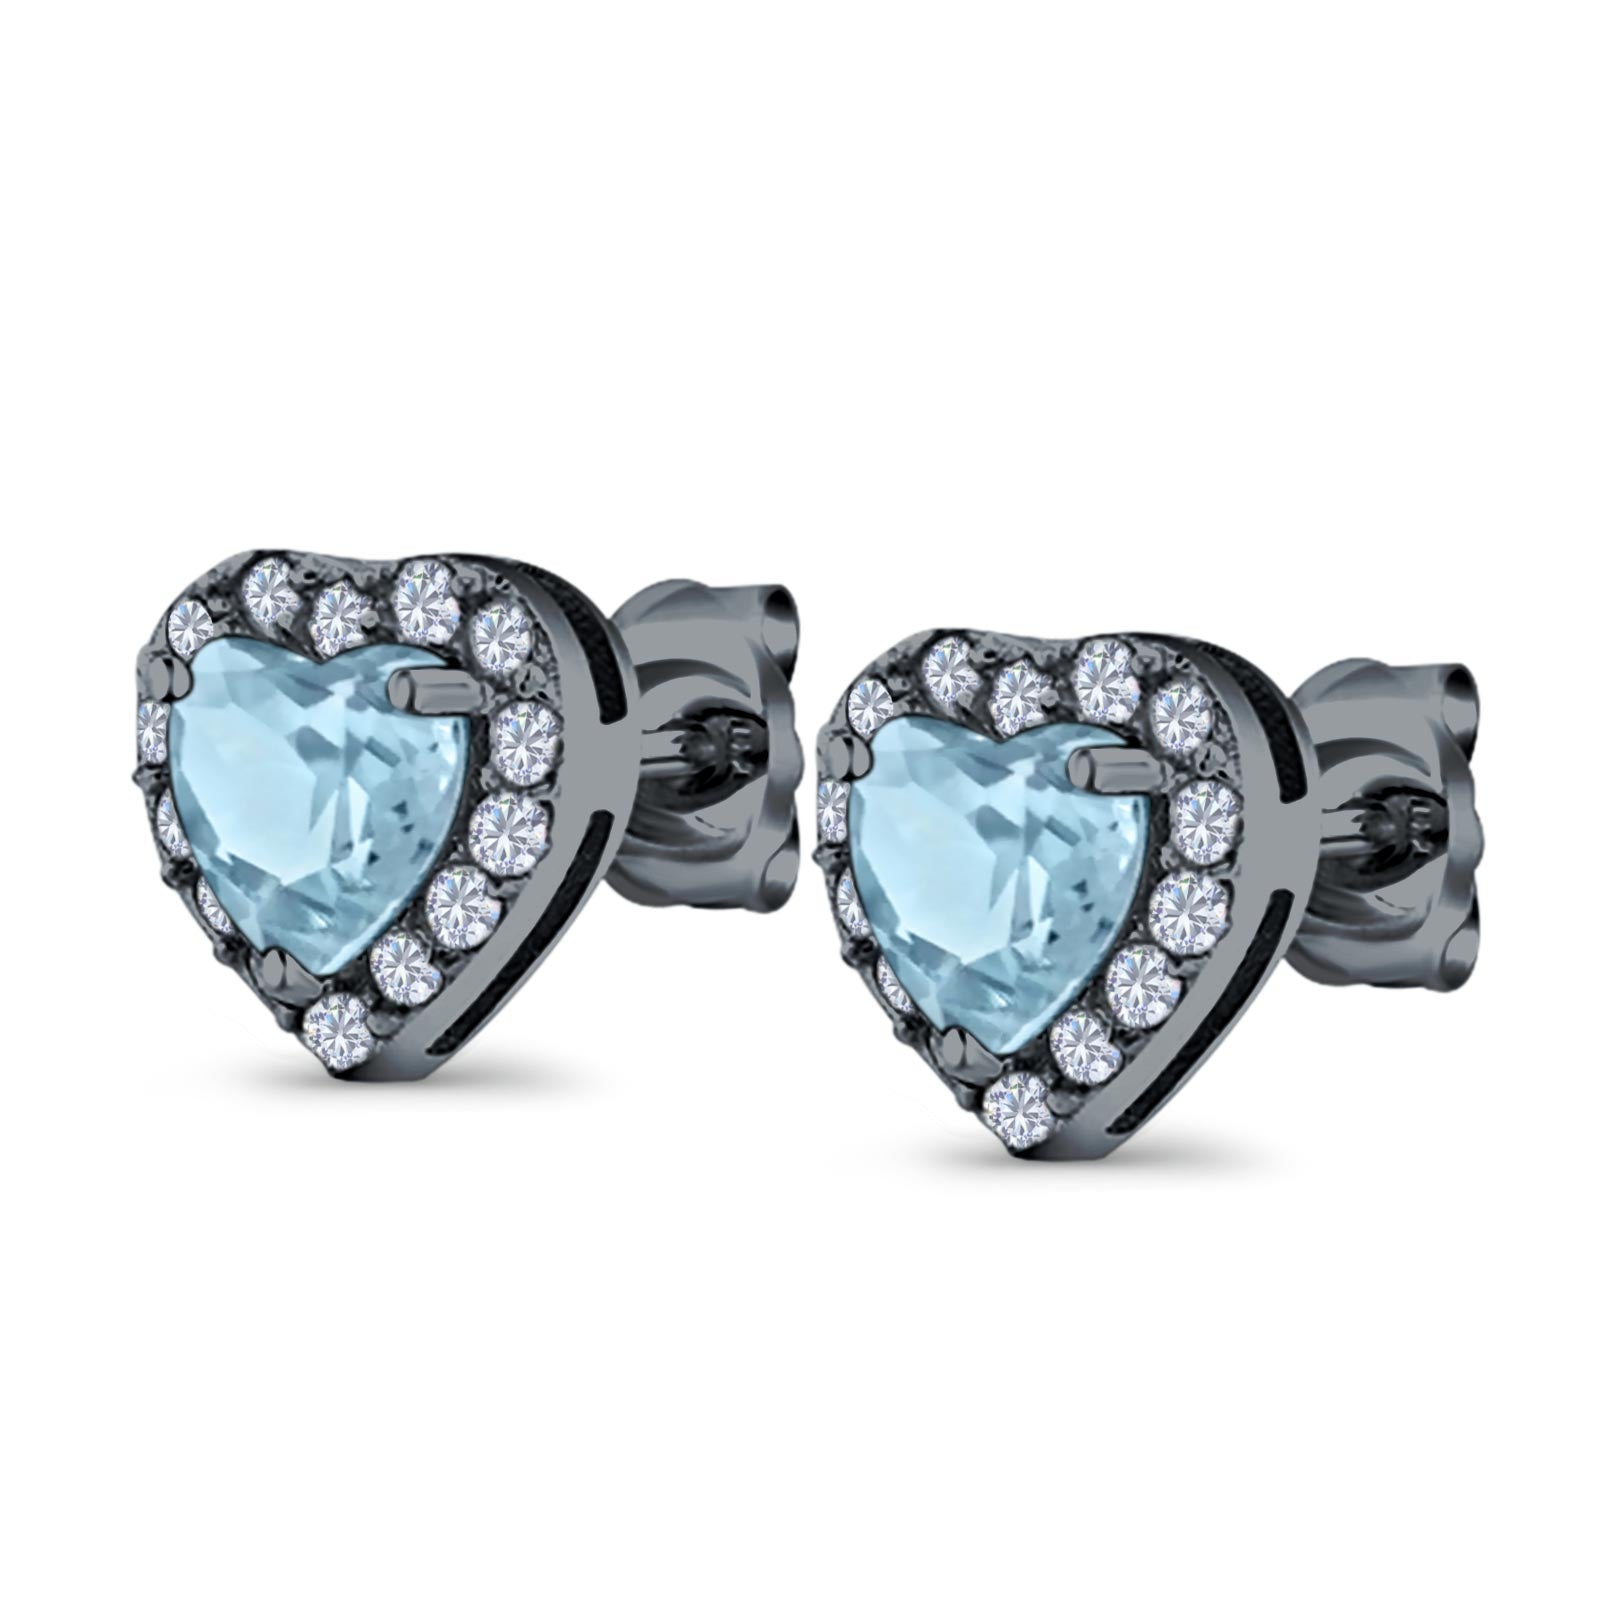 Heart shape Stud Earrings Wedding Simulated CZ 925 Sterling Silver (10mm)